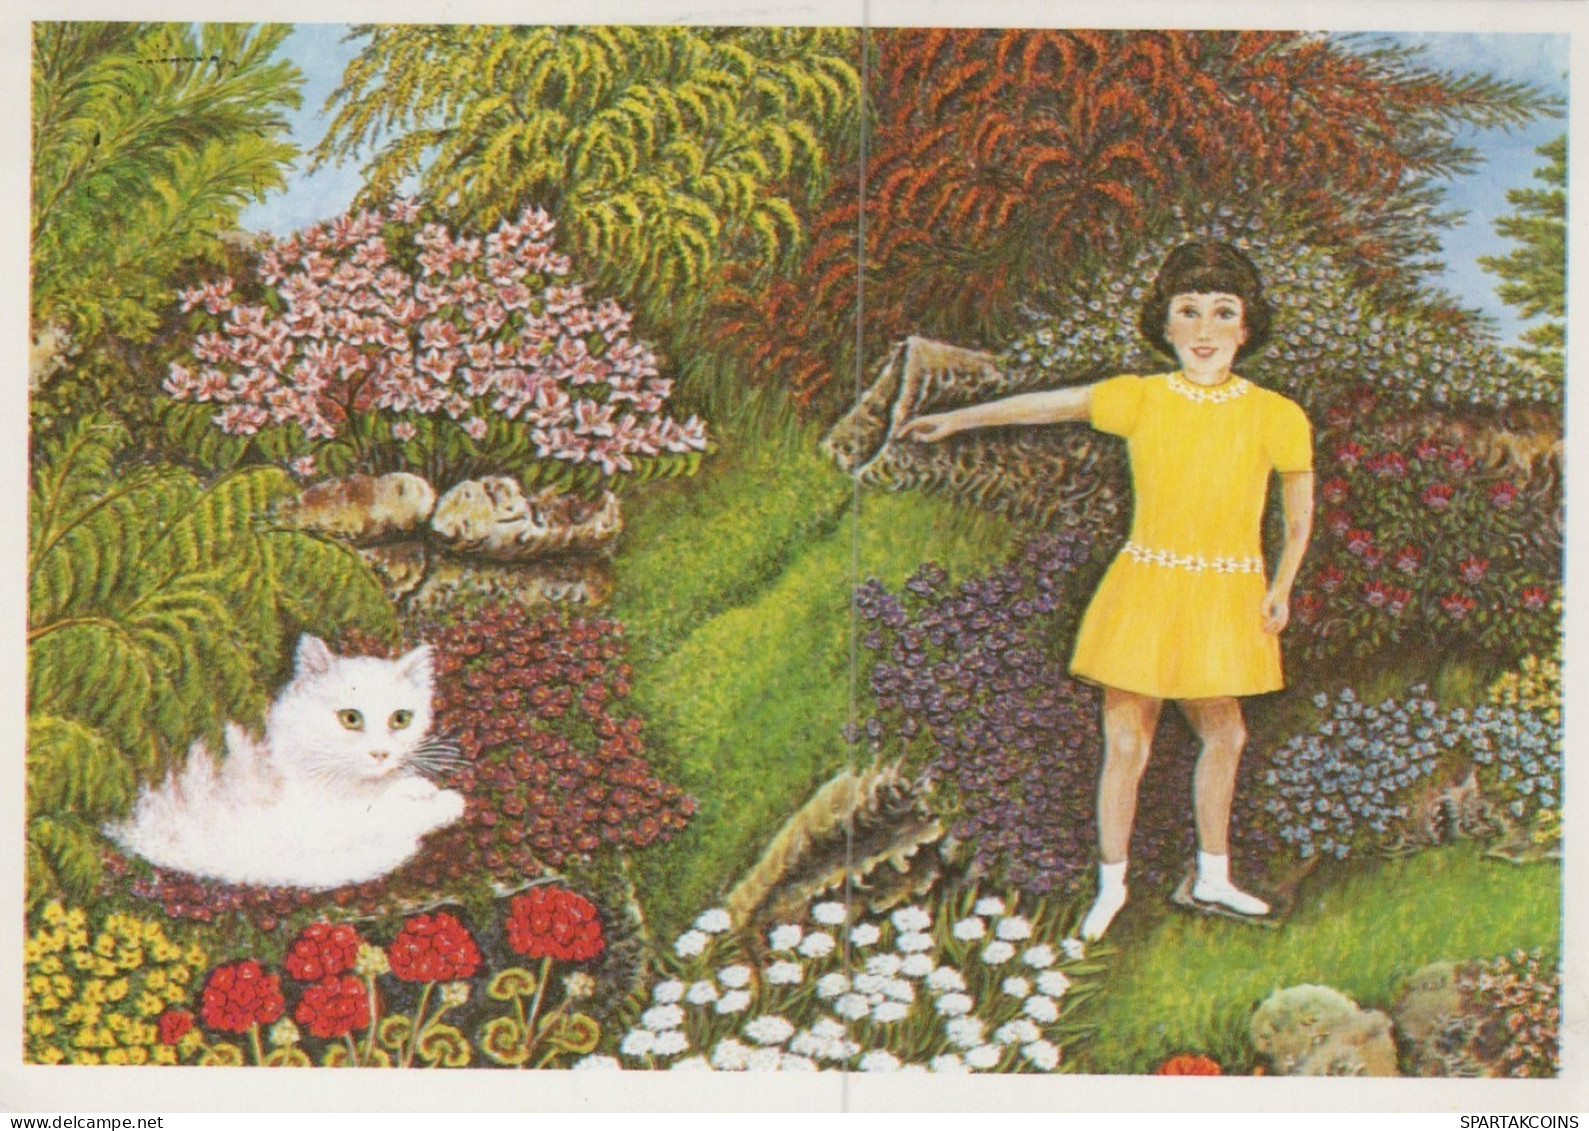 GATTO KITTY Animale Vintage Cartolina CPSM #PAM384.IT - Cats